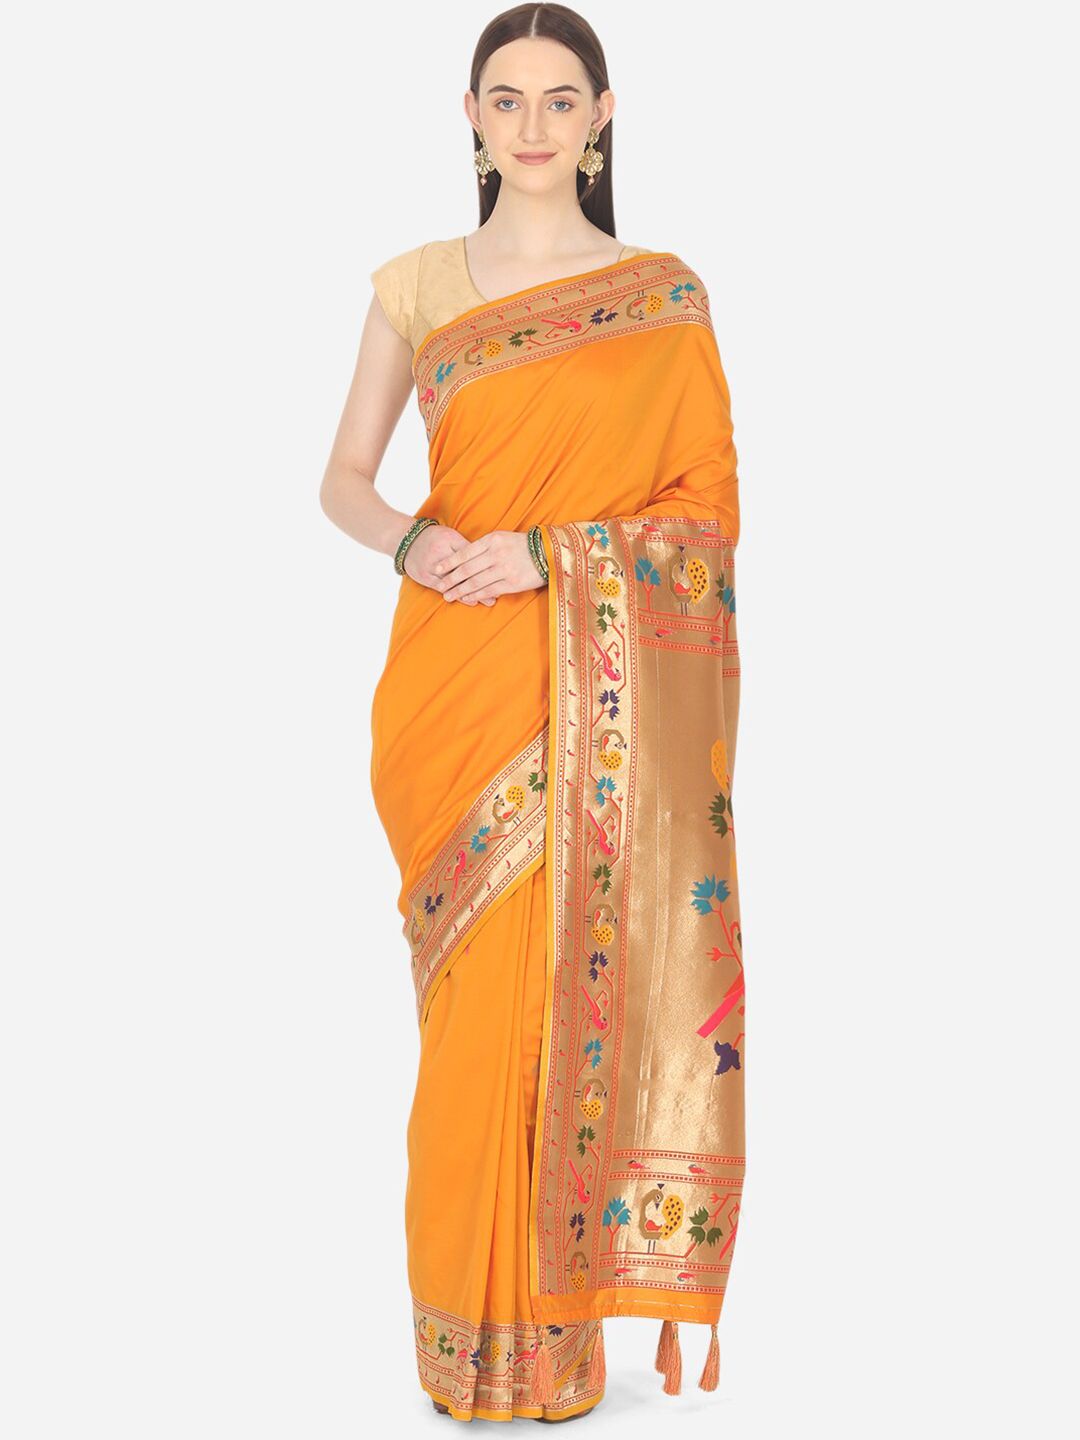 BOMBAY SELECTIONS Orange & Gold-Coloured Zari Art Silk Banarasi Saree Price in India